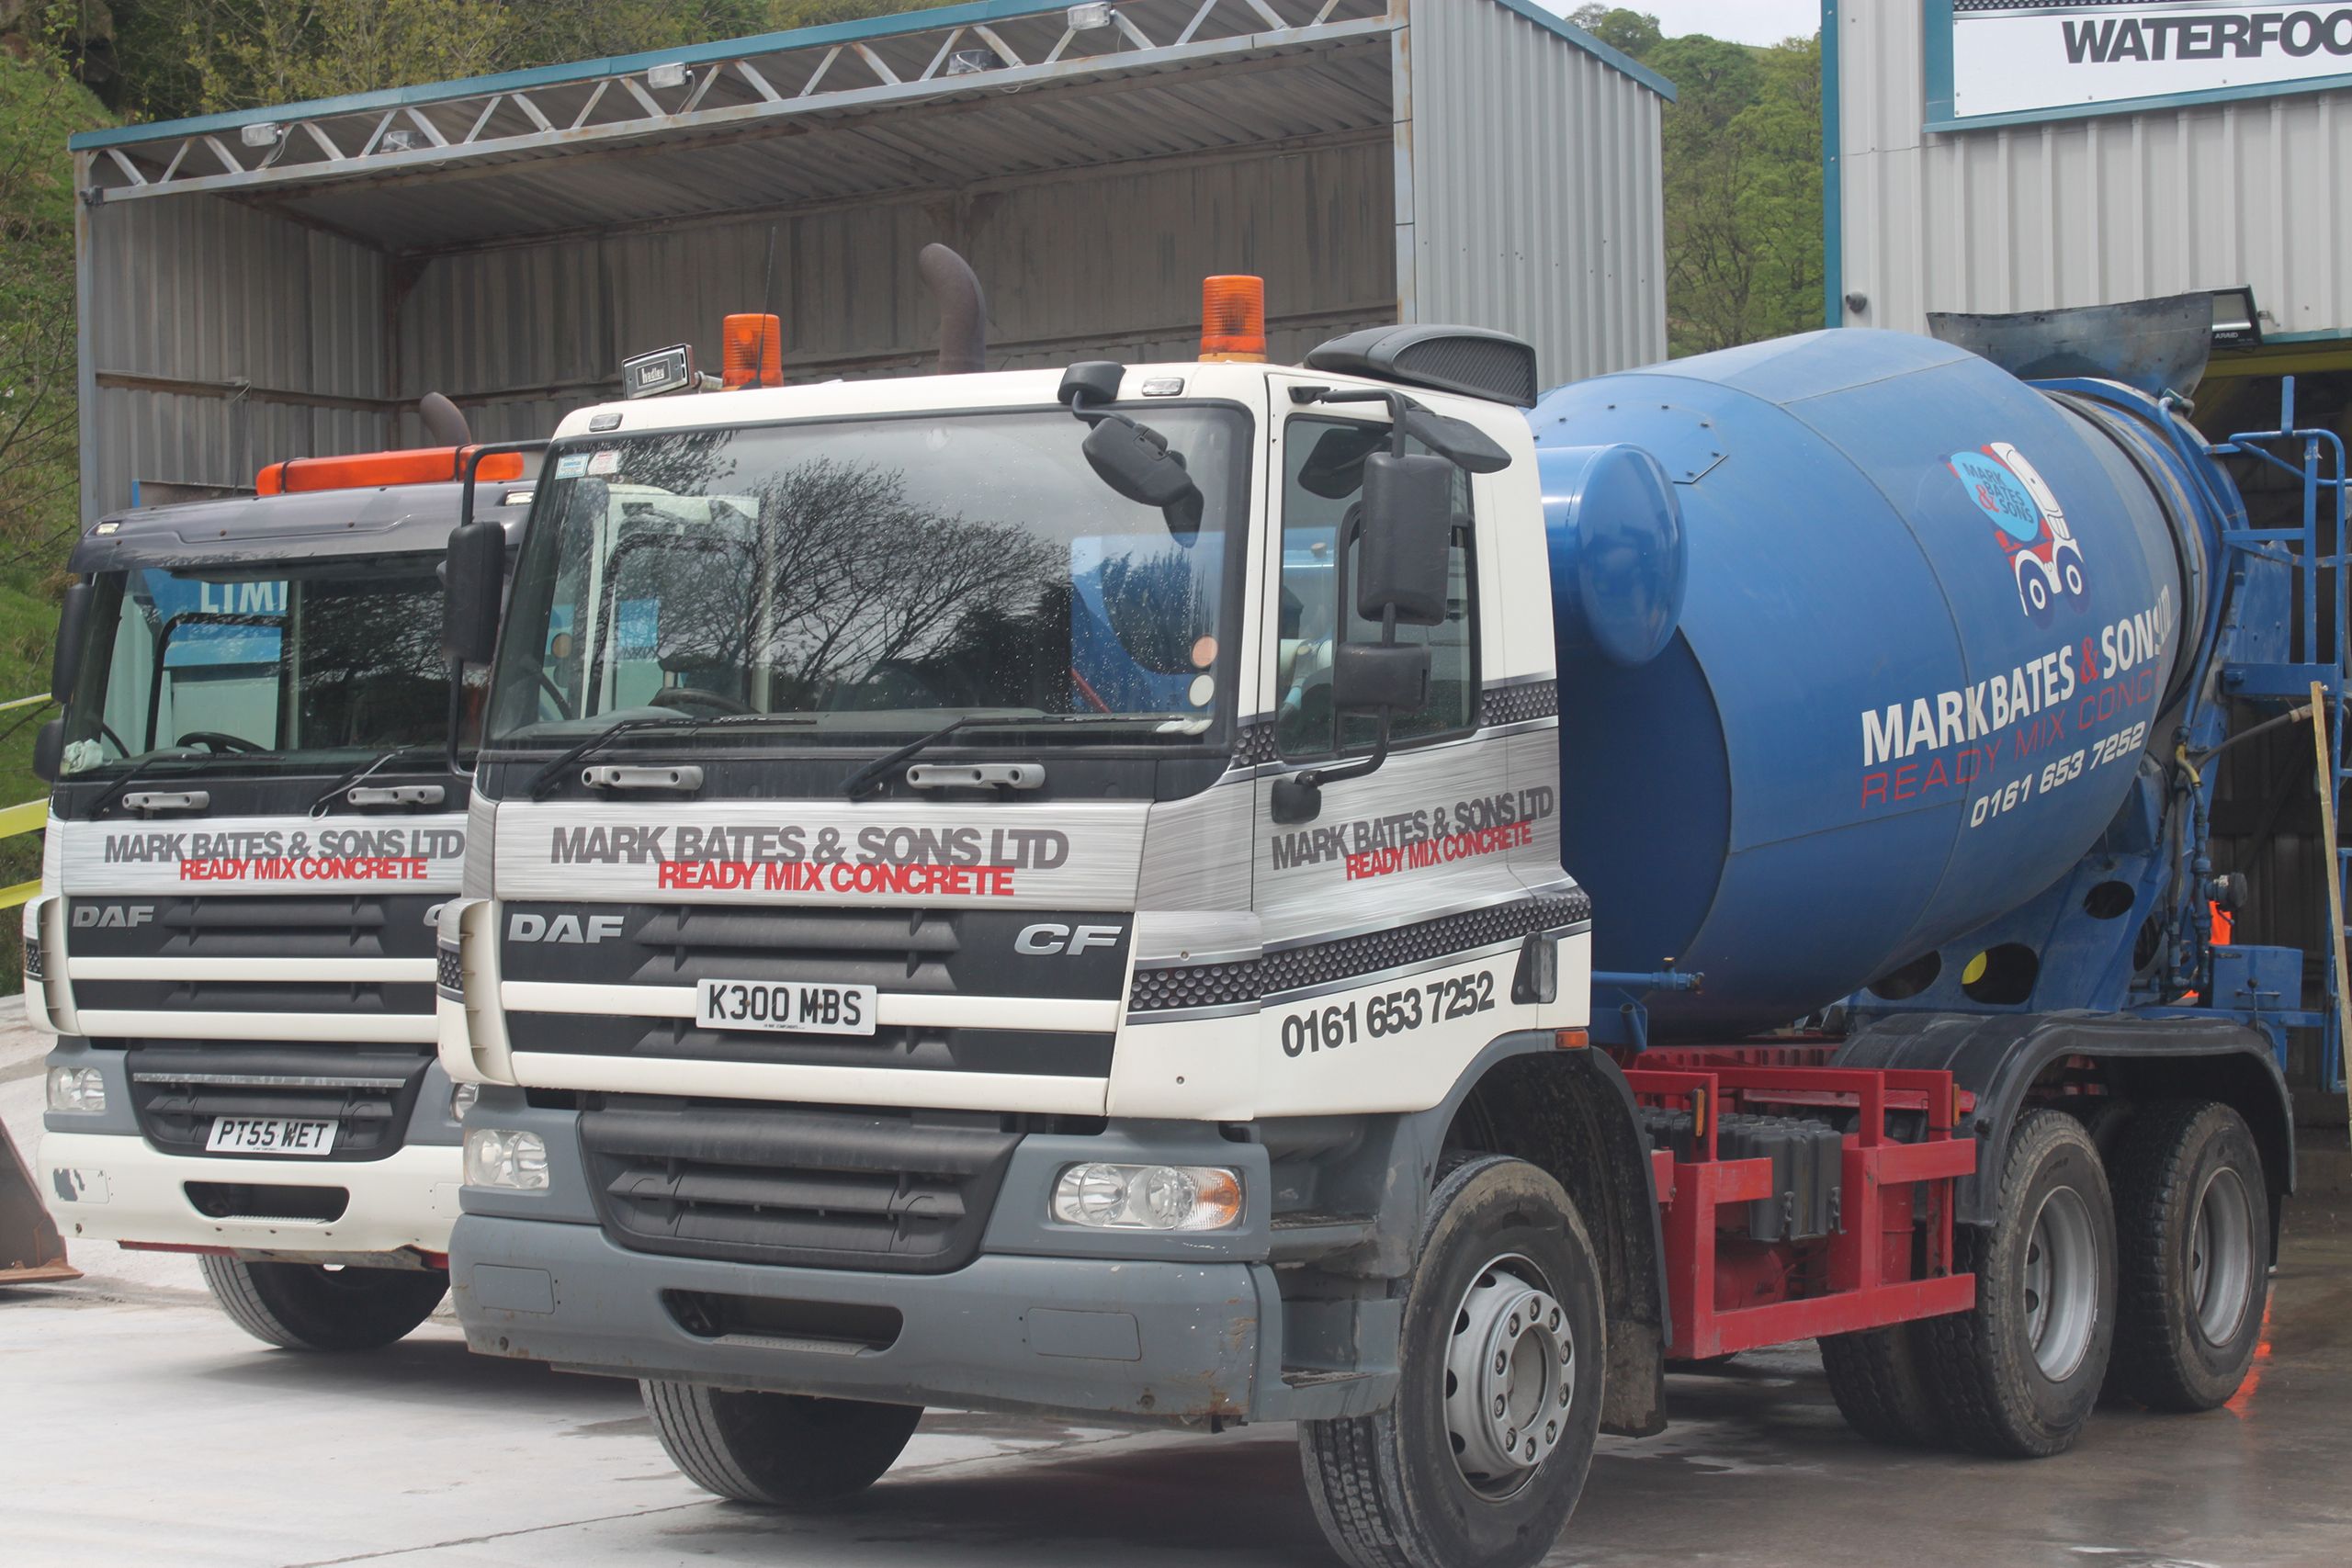 An image of two Mark Bates & Sons Ltd concrete trucks